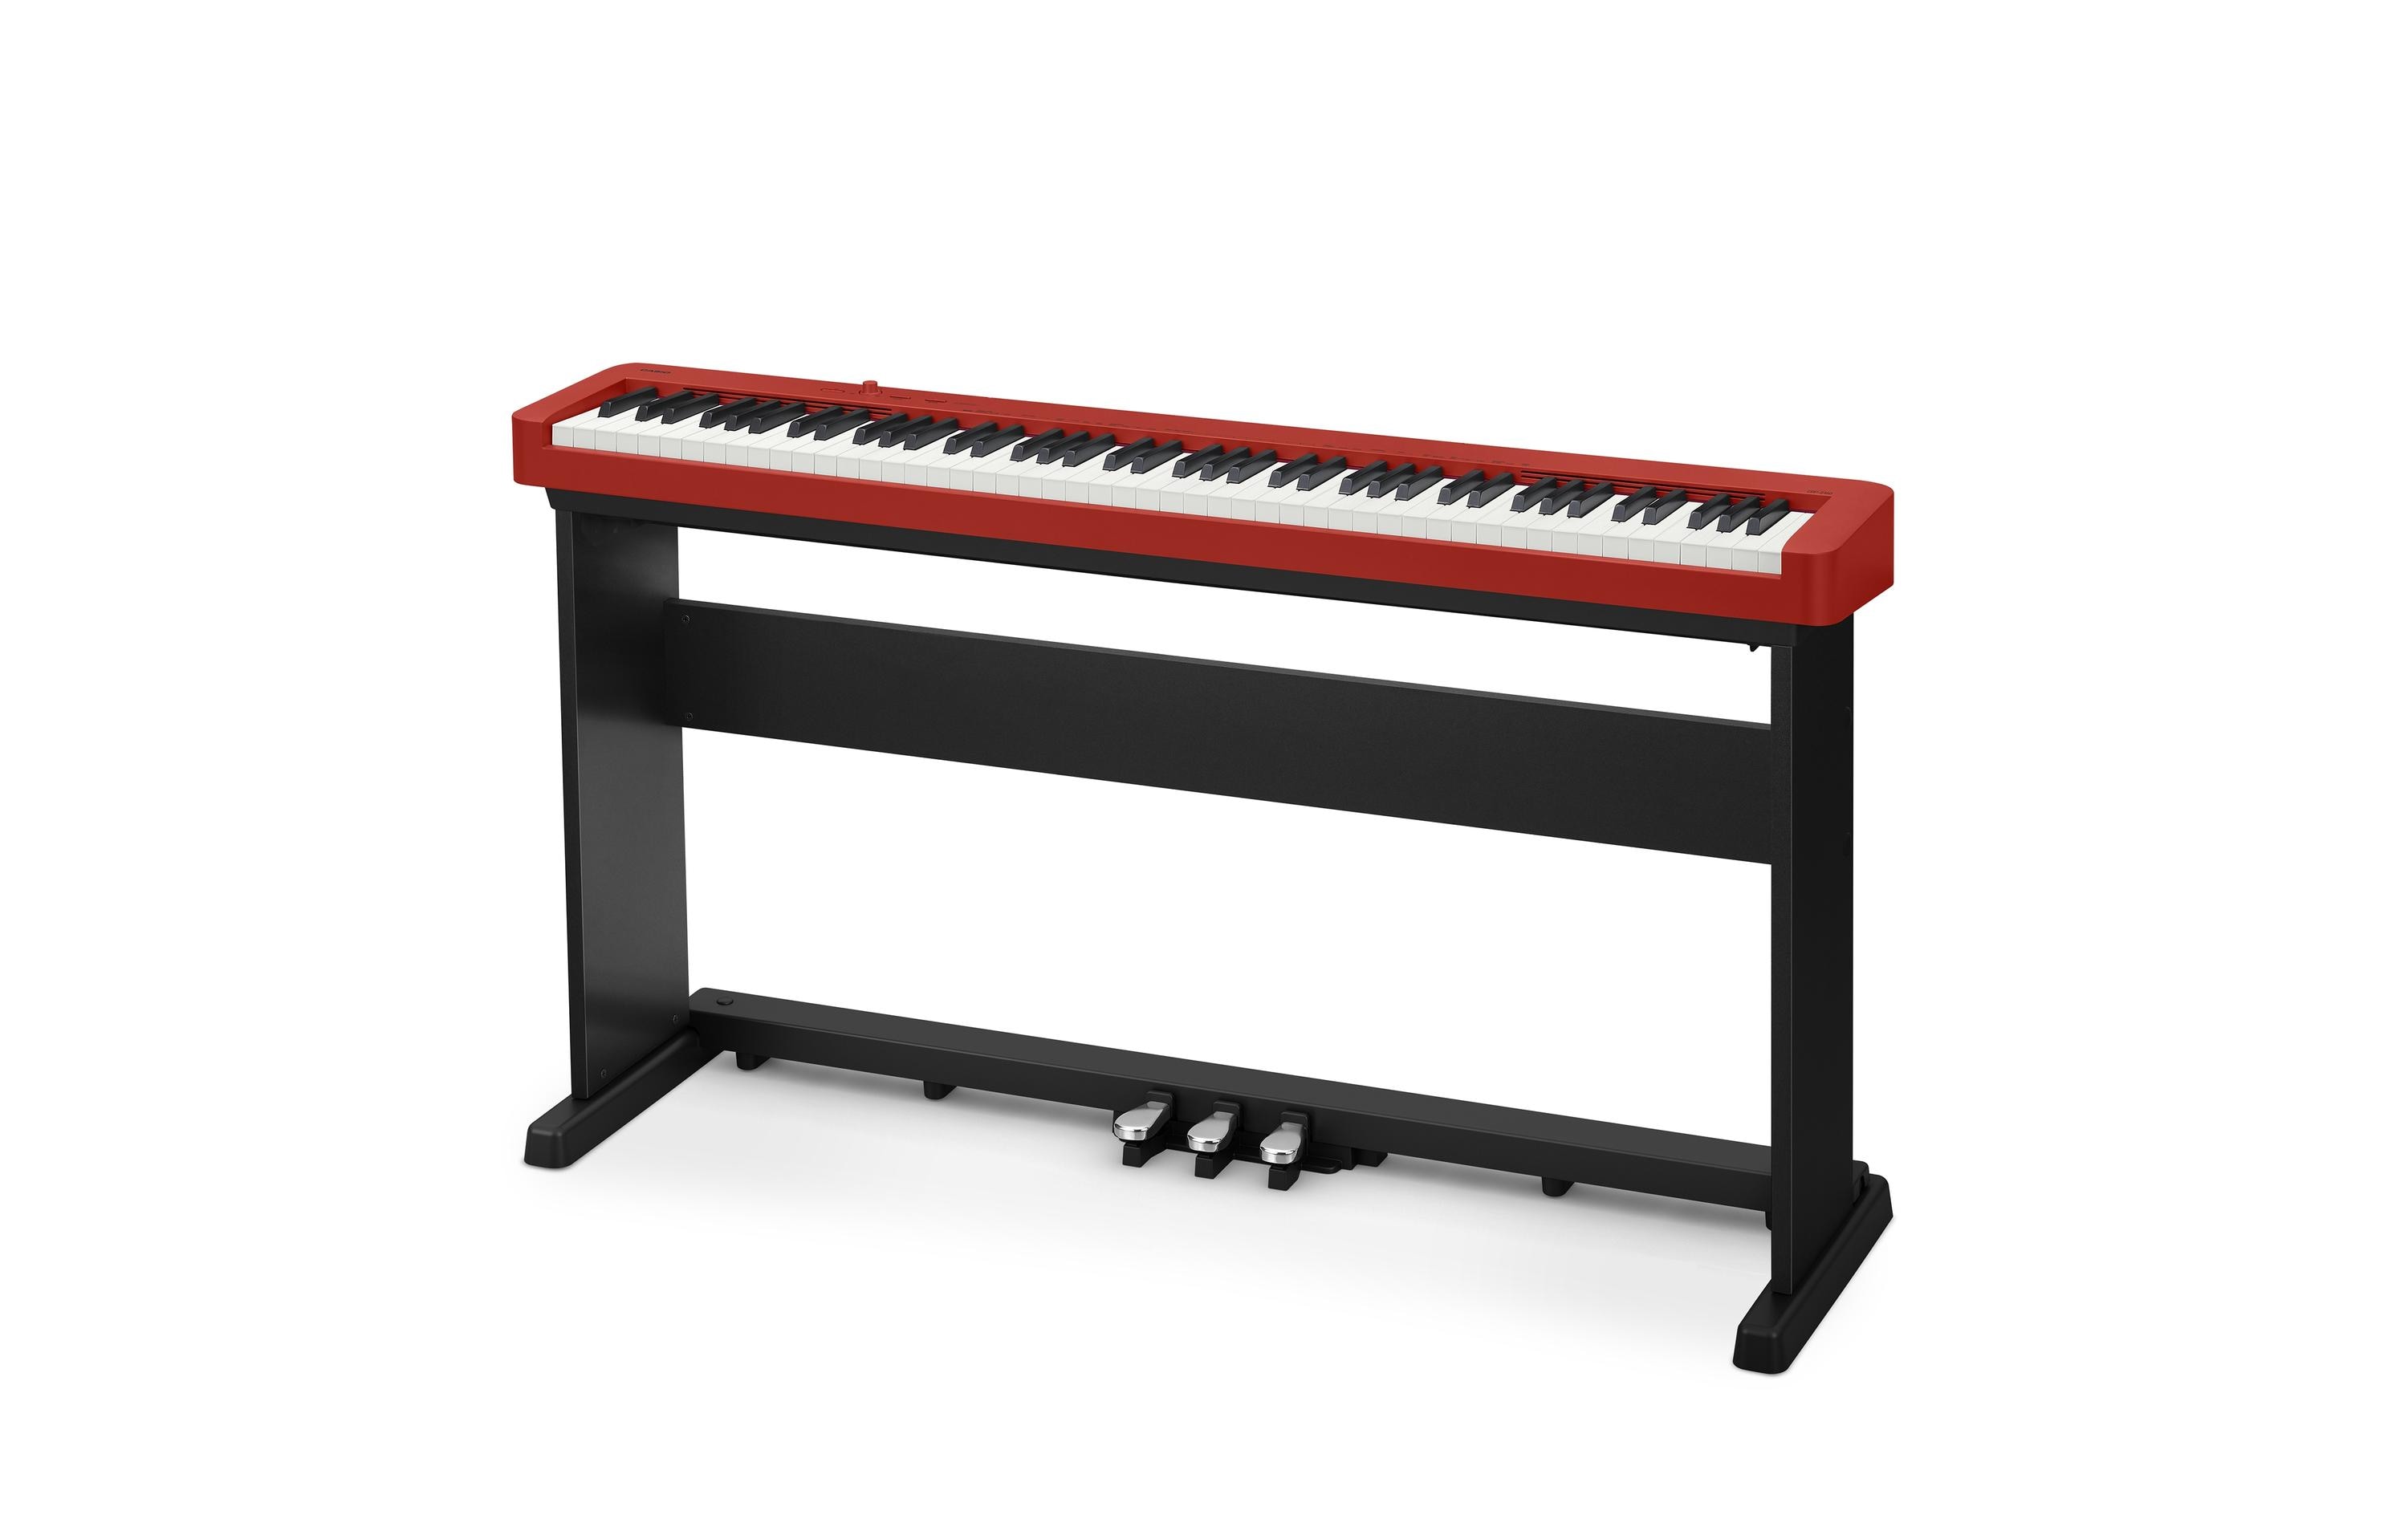 Casio E-Piano CDP-S160 Set, Rot